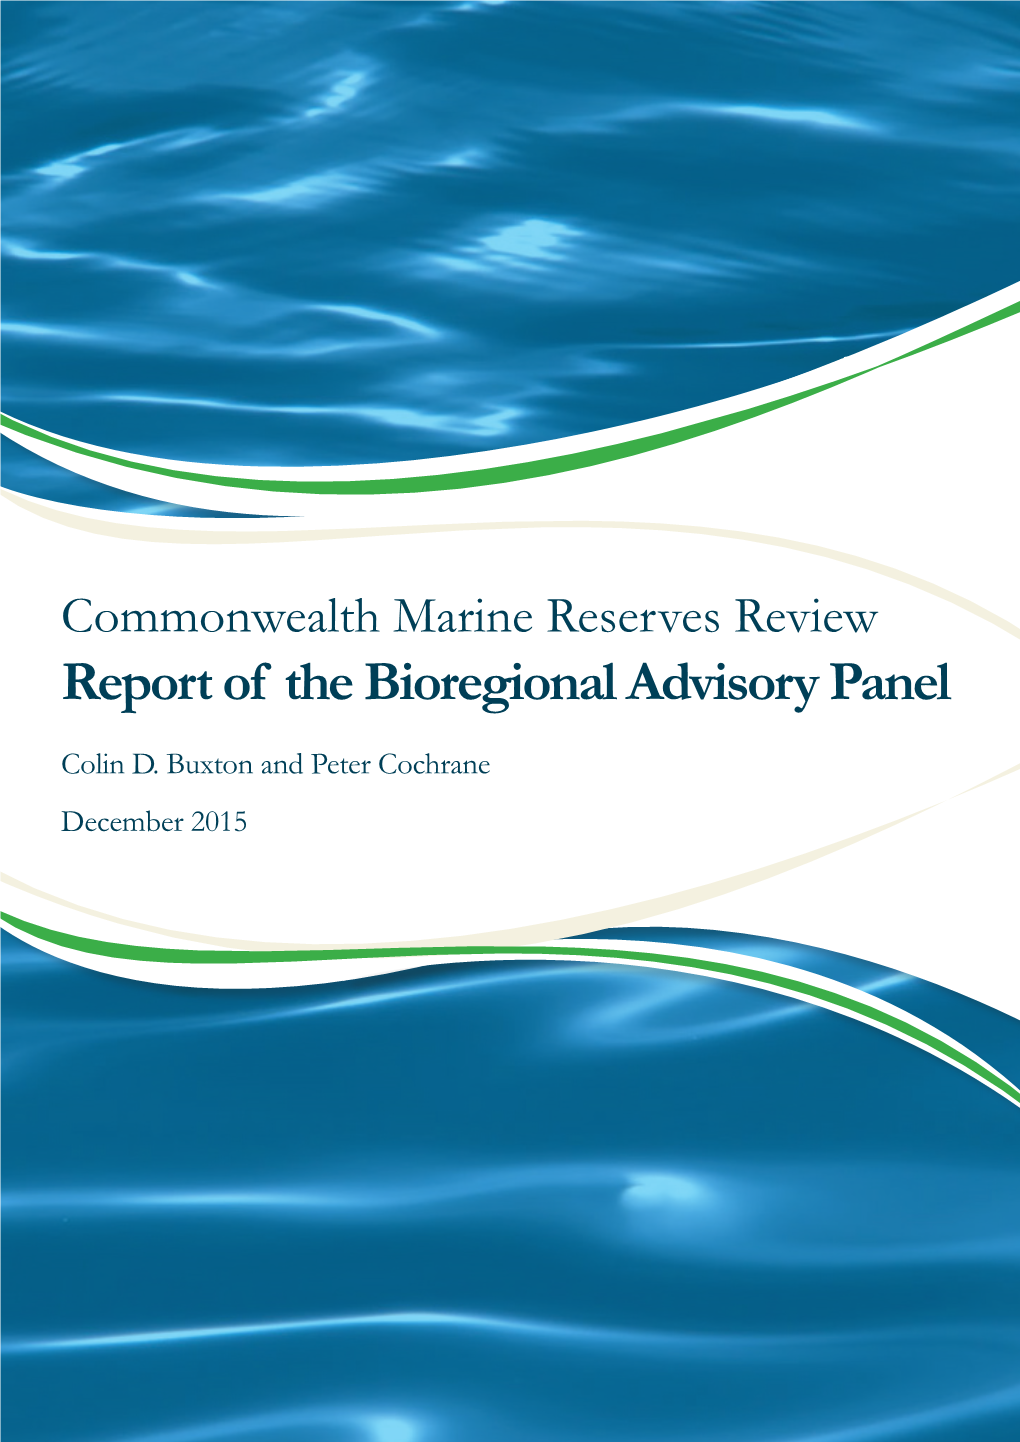 Commonwealth Marine Reserves Review: Report of the Bioregional Advisory Panel